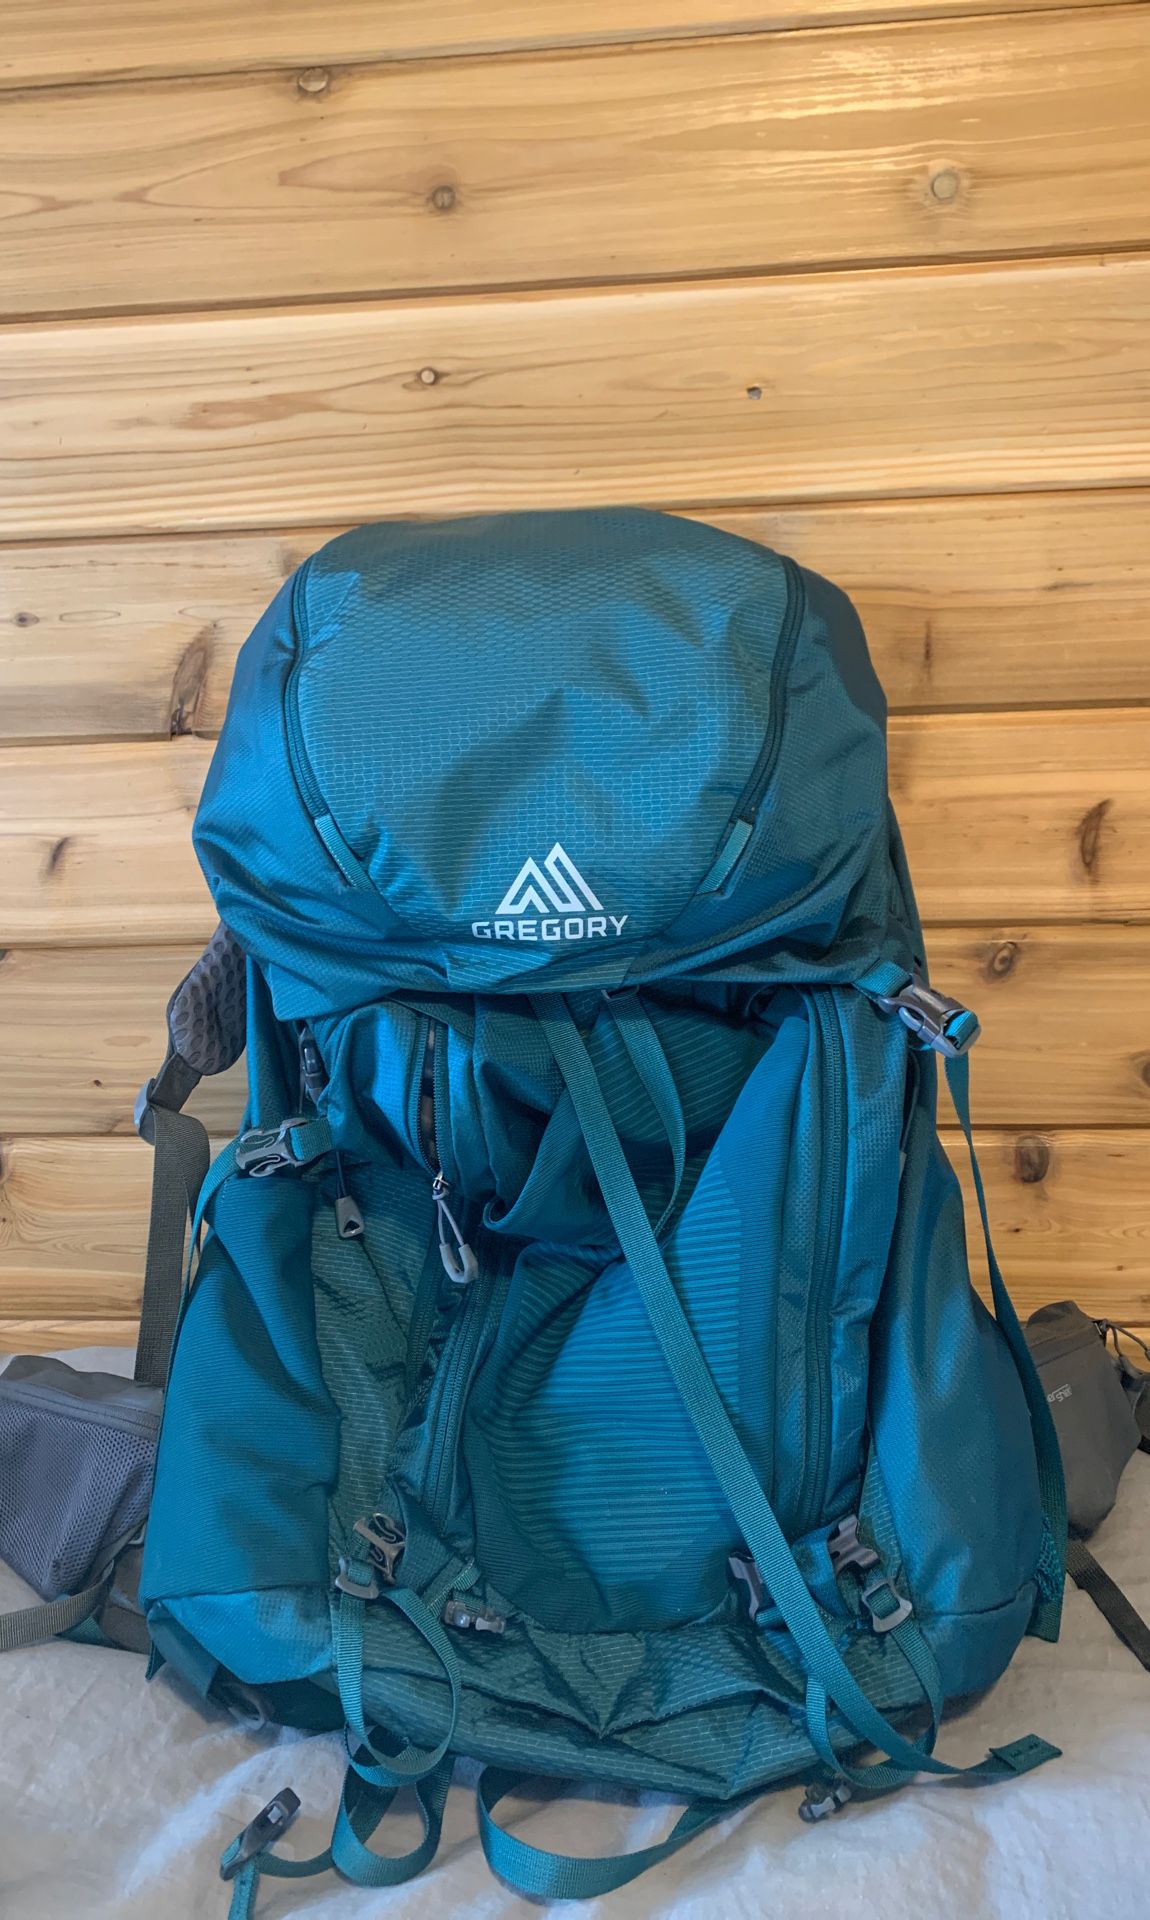 Gregory deva 70 backpacking pack for Sale in Redding, CA - OfferUp